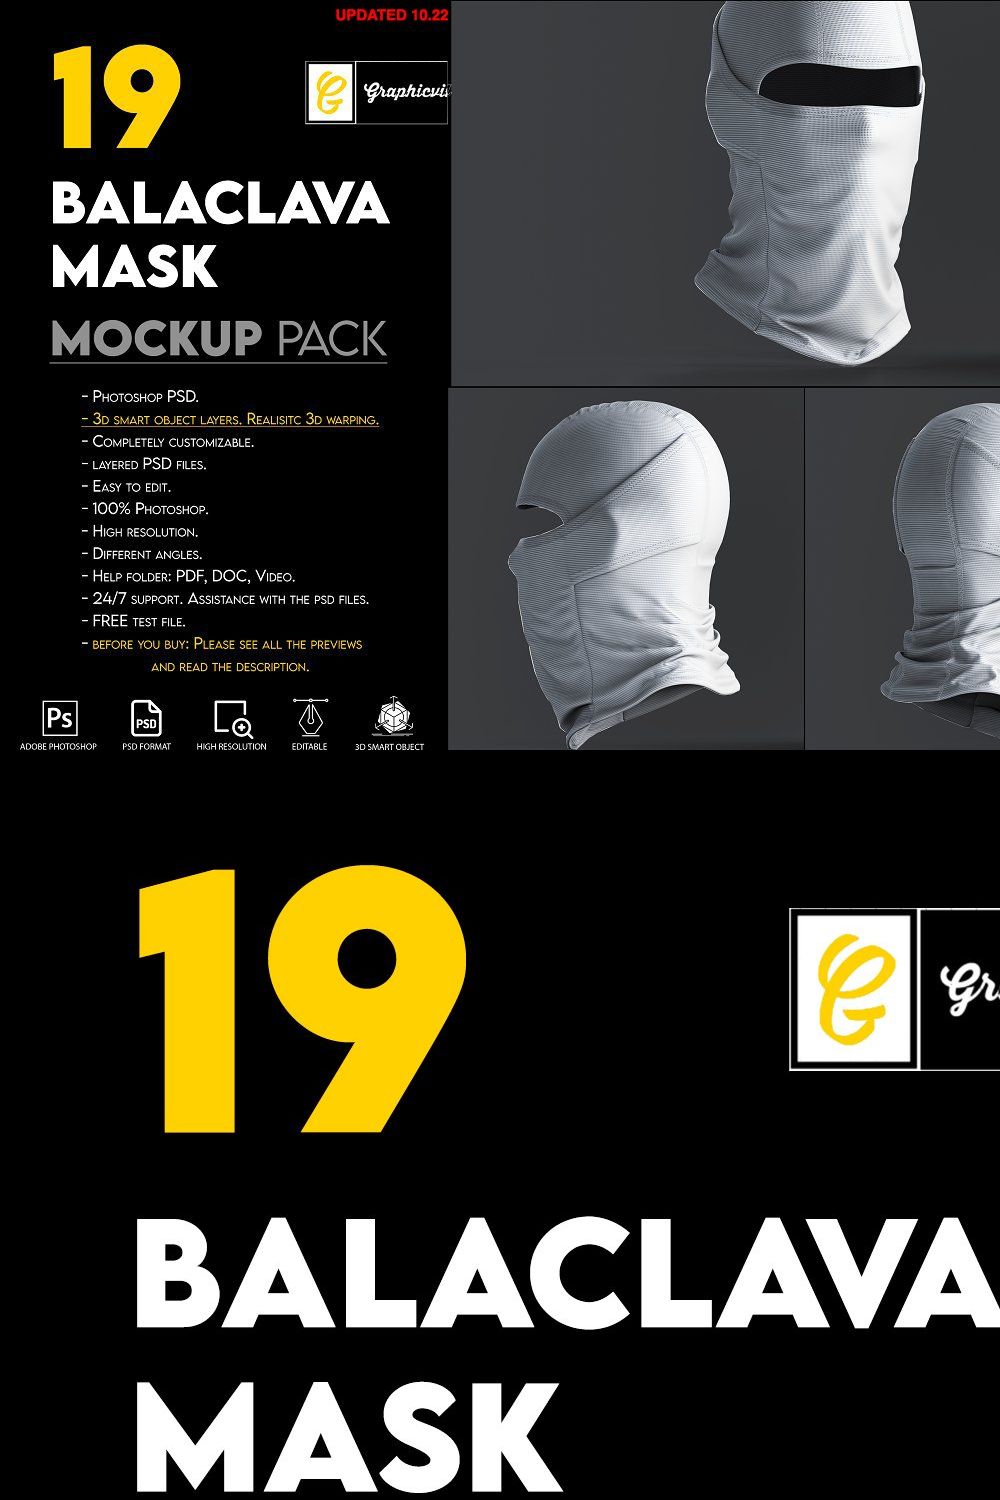 Balaclava Mask Mockup pinterest preview image.